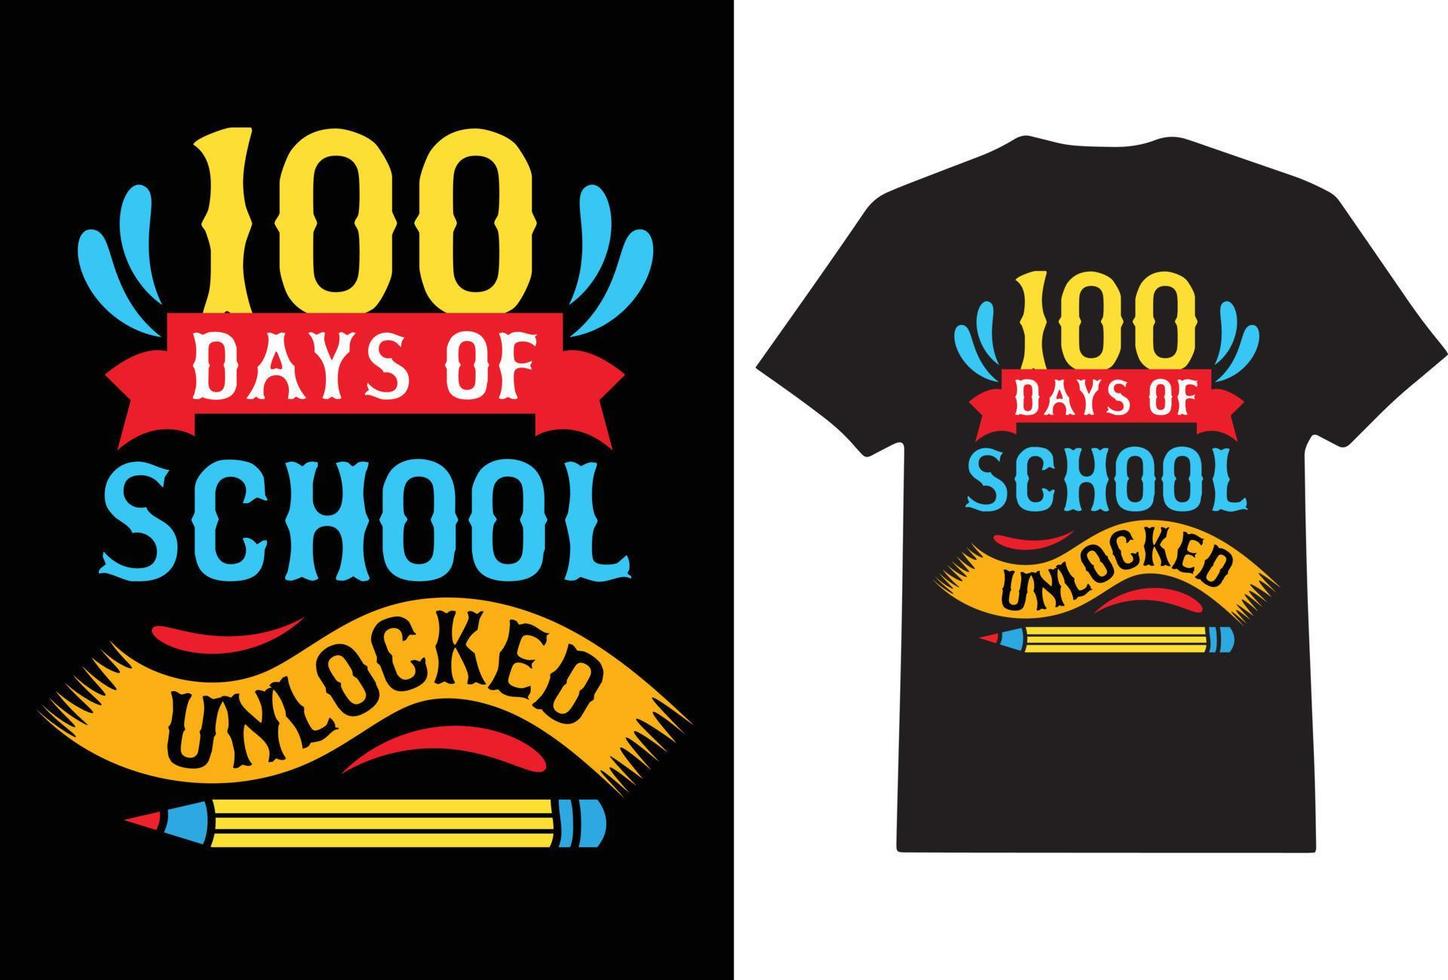 Lycklig 100 dag av skola t-shirt design skriva ut redo vektor fil